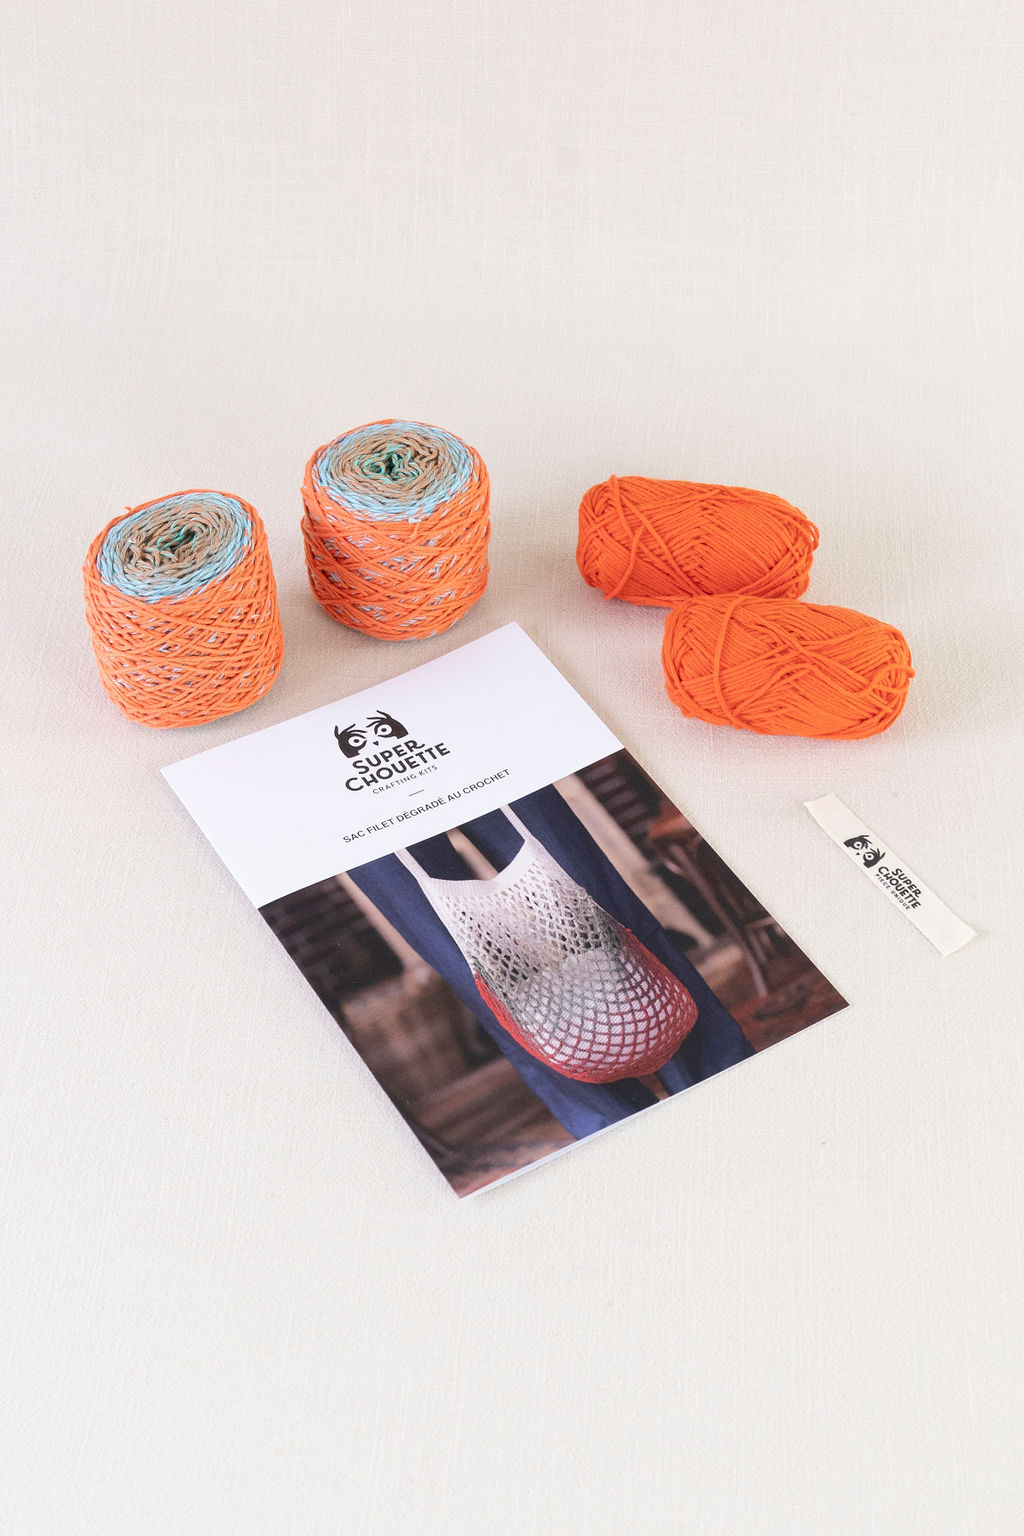 Kit Crochet - Sac filet dégradé - Chouette Kit